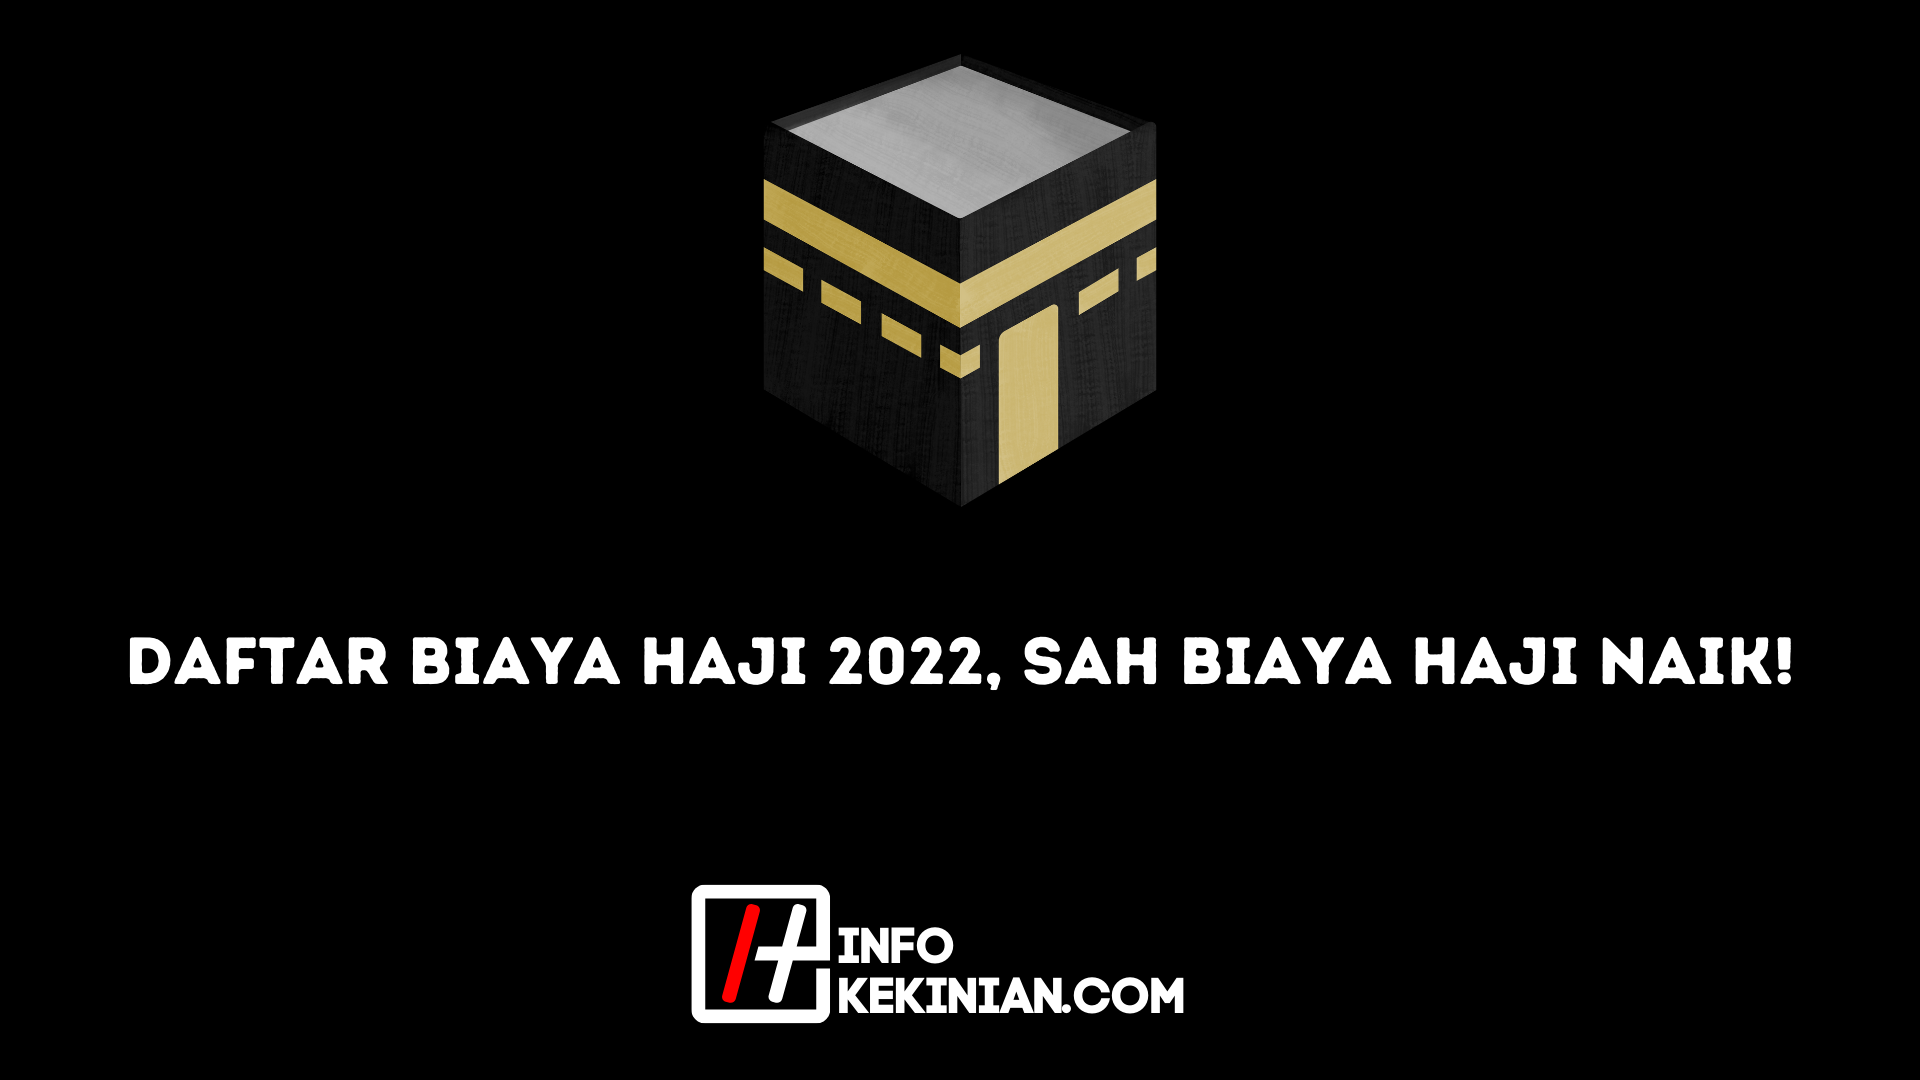 Daftar Biaya Haji 2022 Sah Biaya Haji Naik